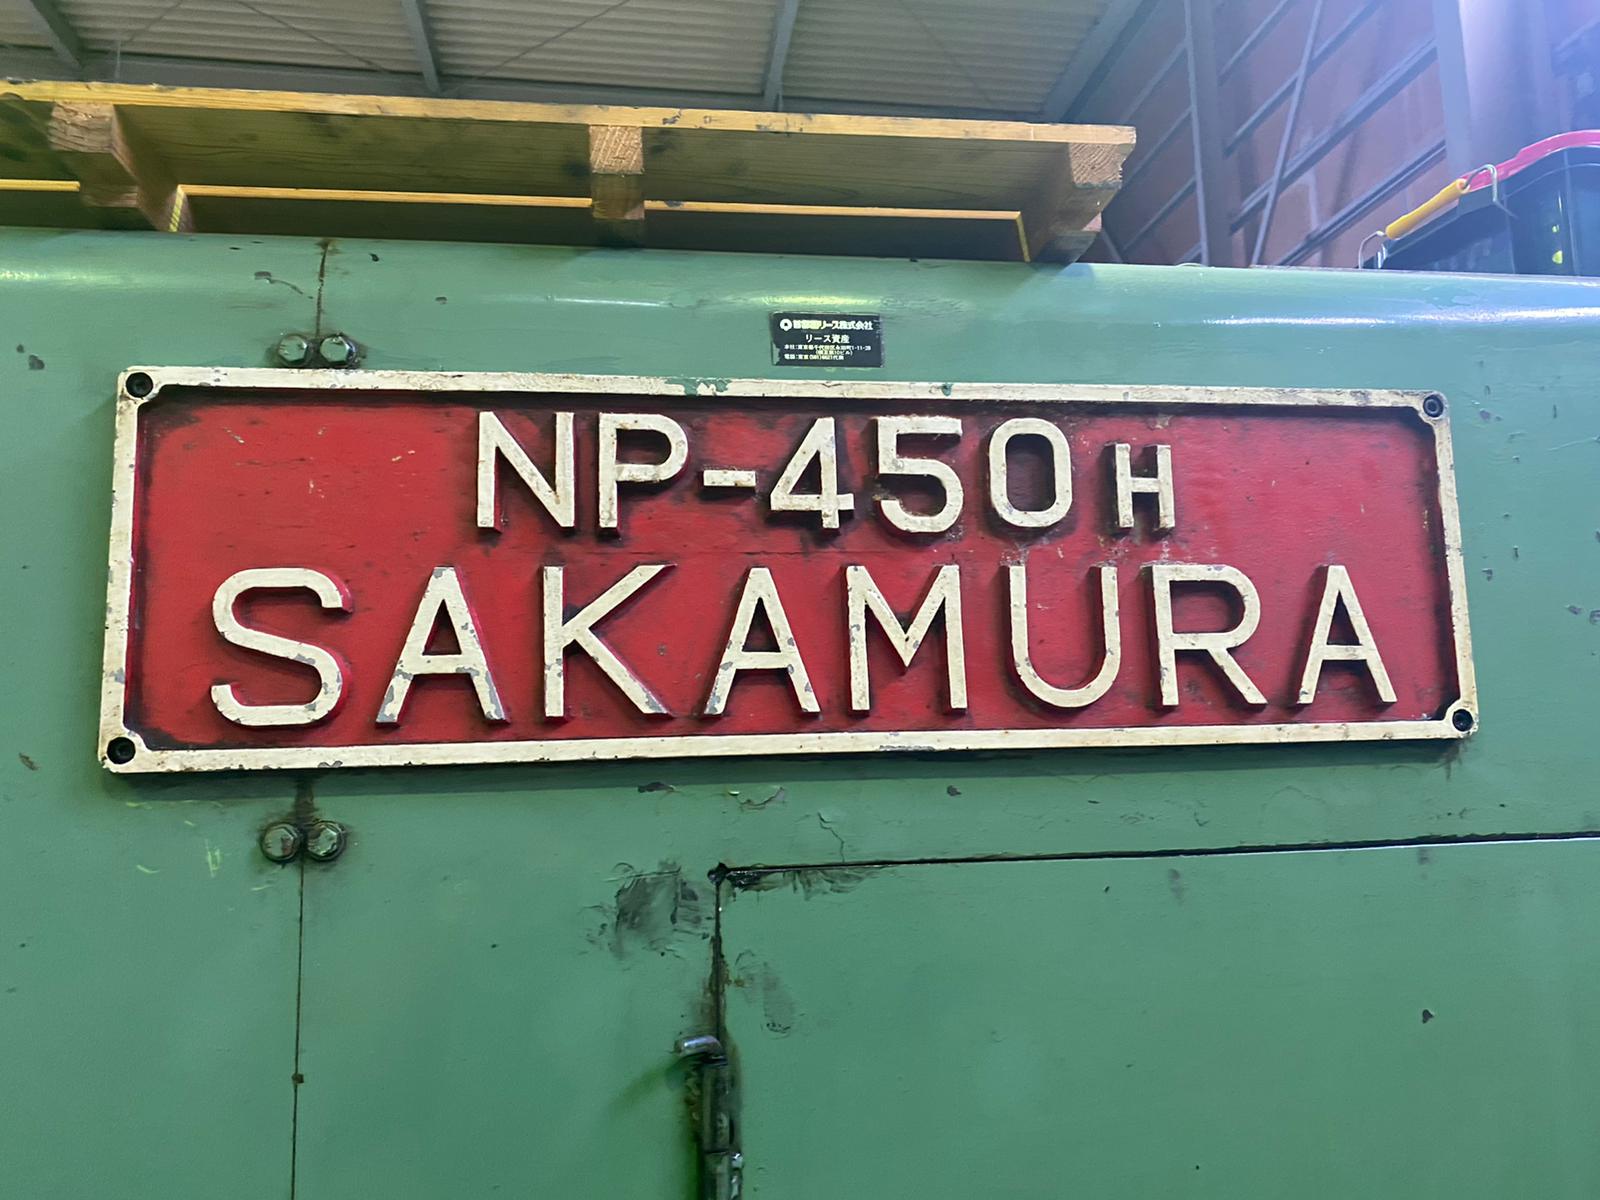 M16x24 Sakamura nut former